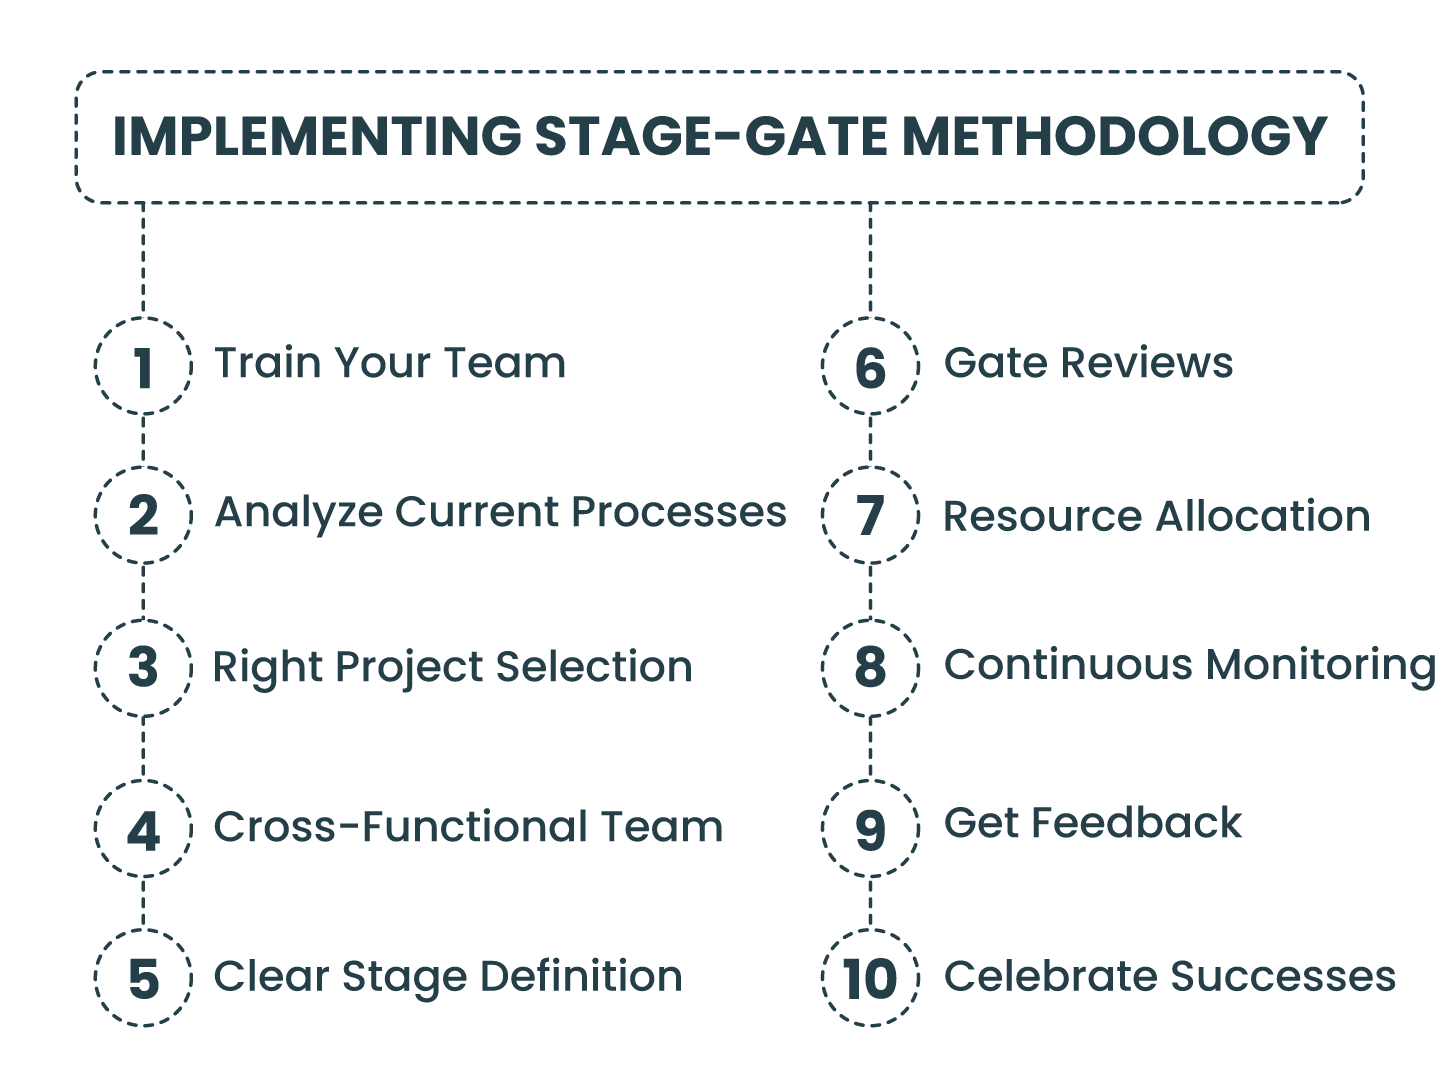 Stage-Gate Methodology